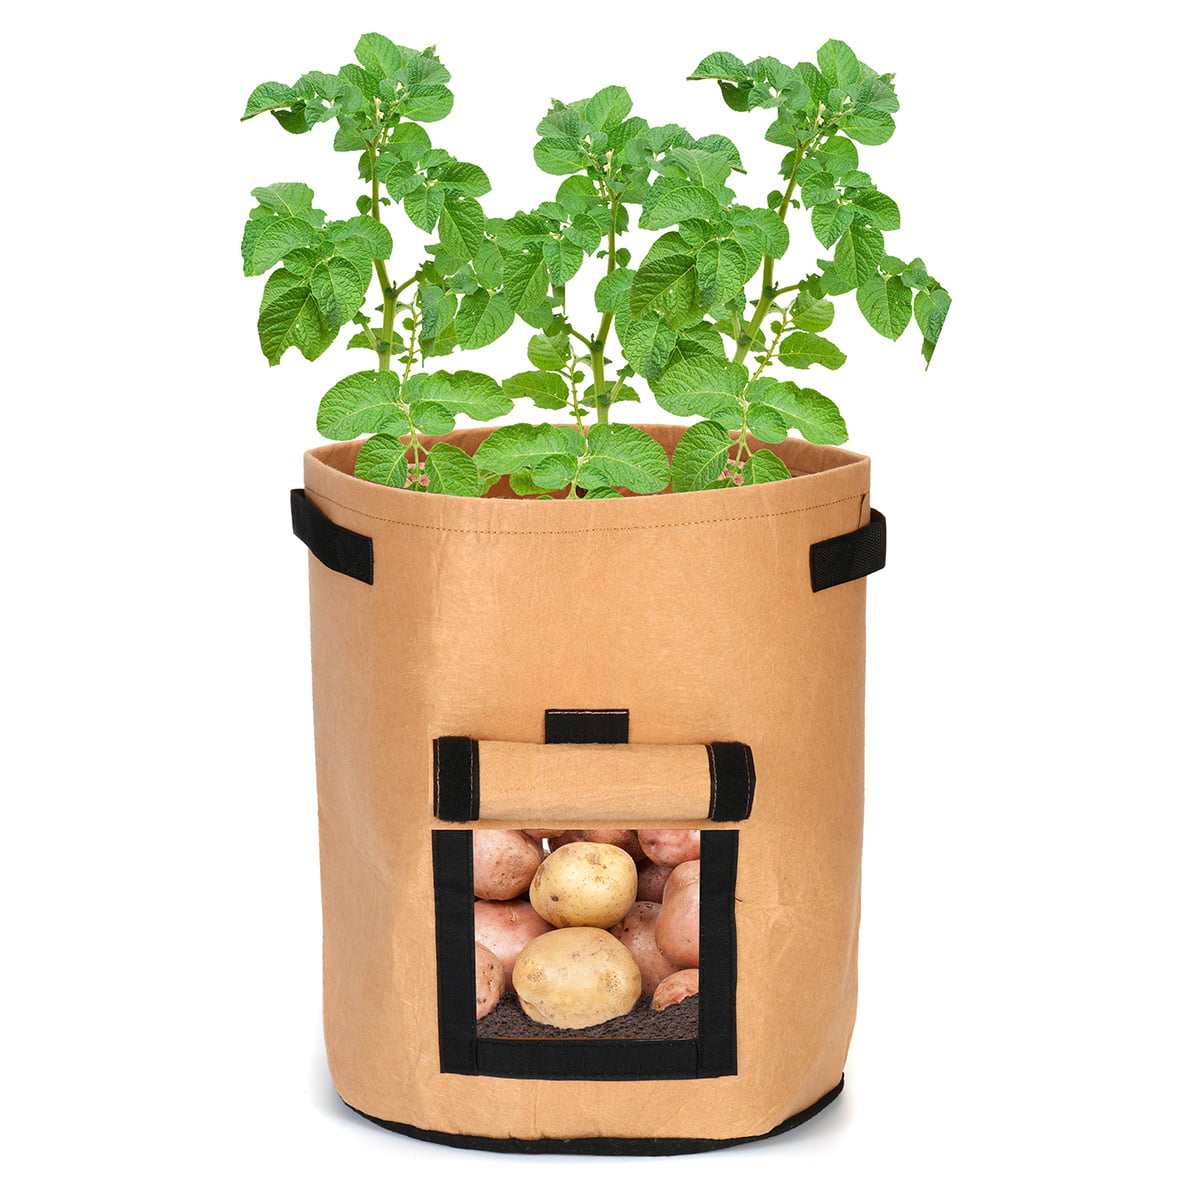 New 1pc Cultivation Plant Grow Bag Potato Grow Planter Vegetable Growing Bag 